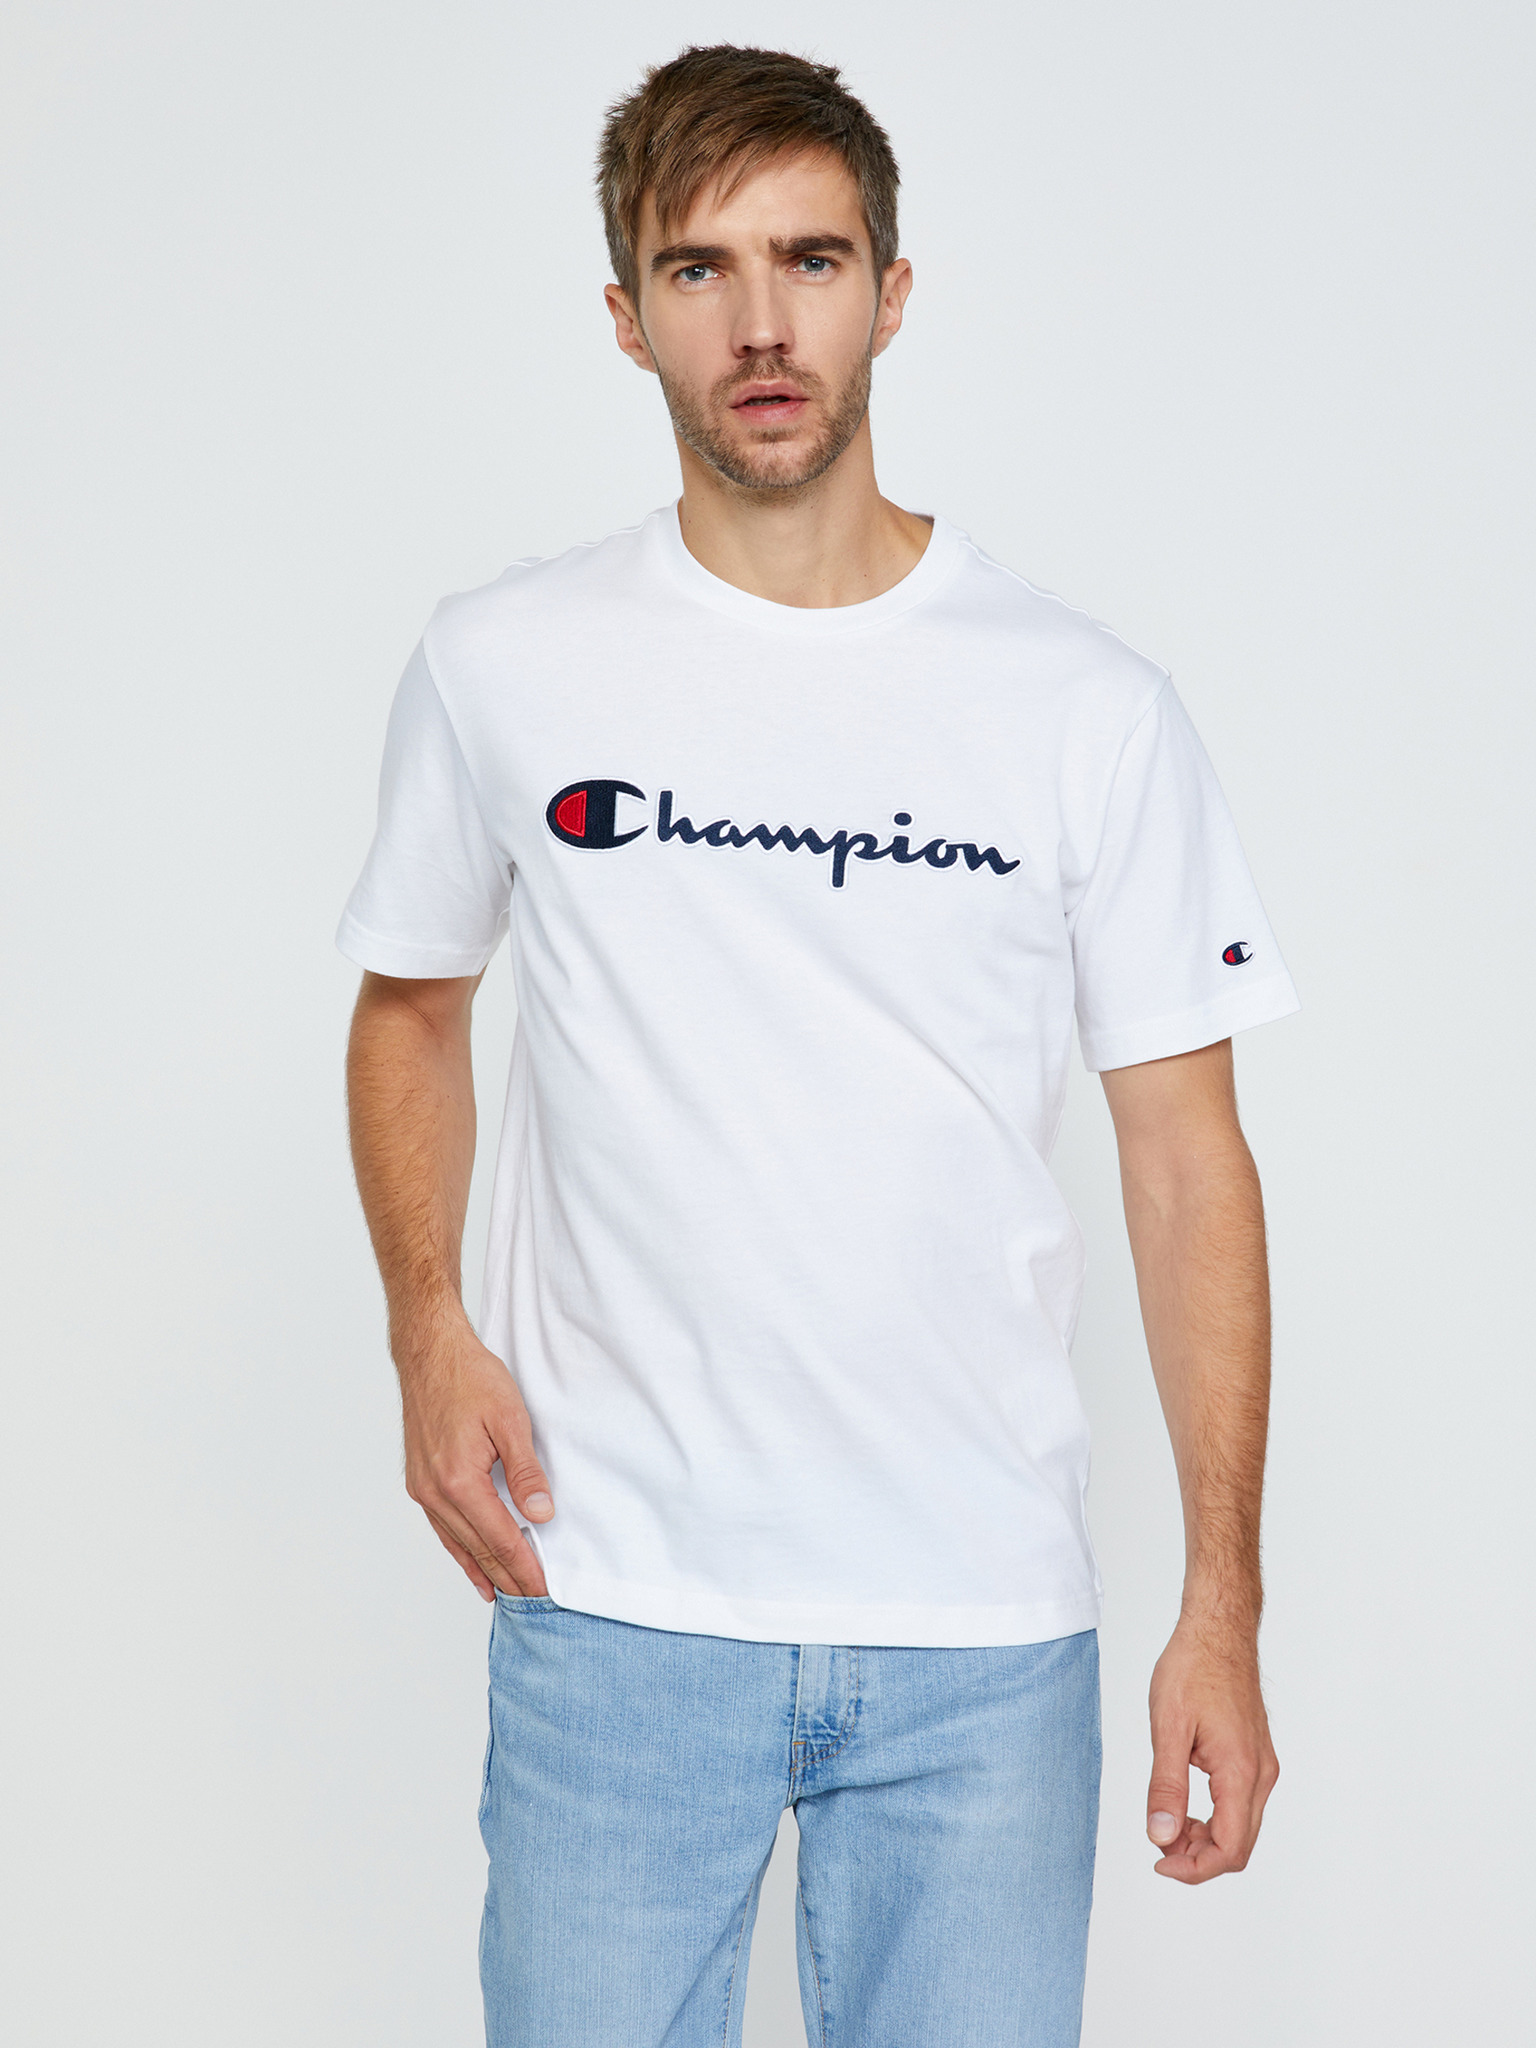 Champion - T-shirt Bibloo.com